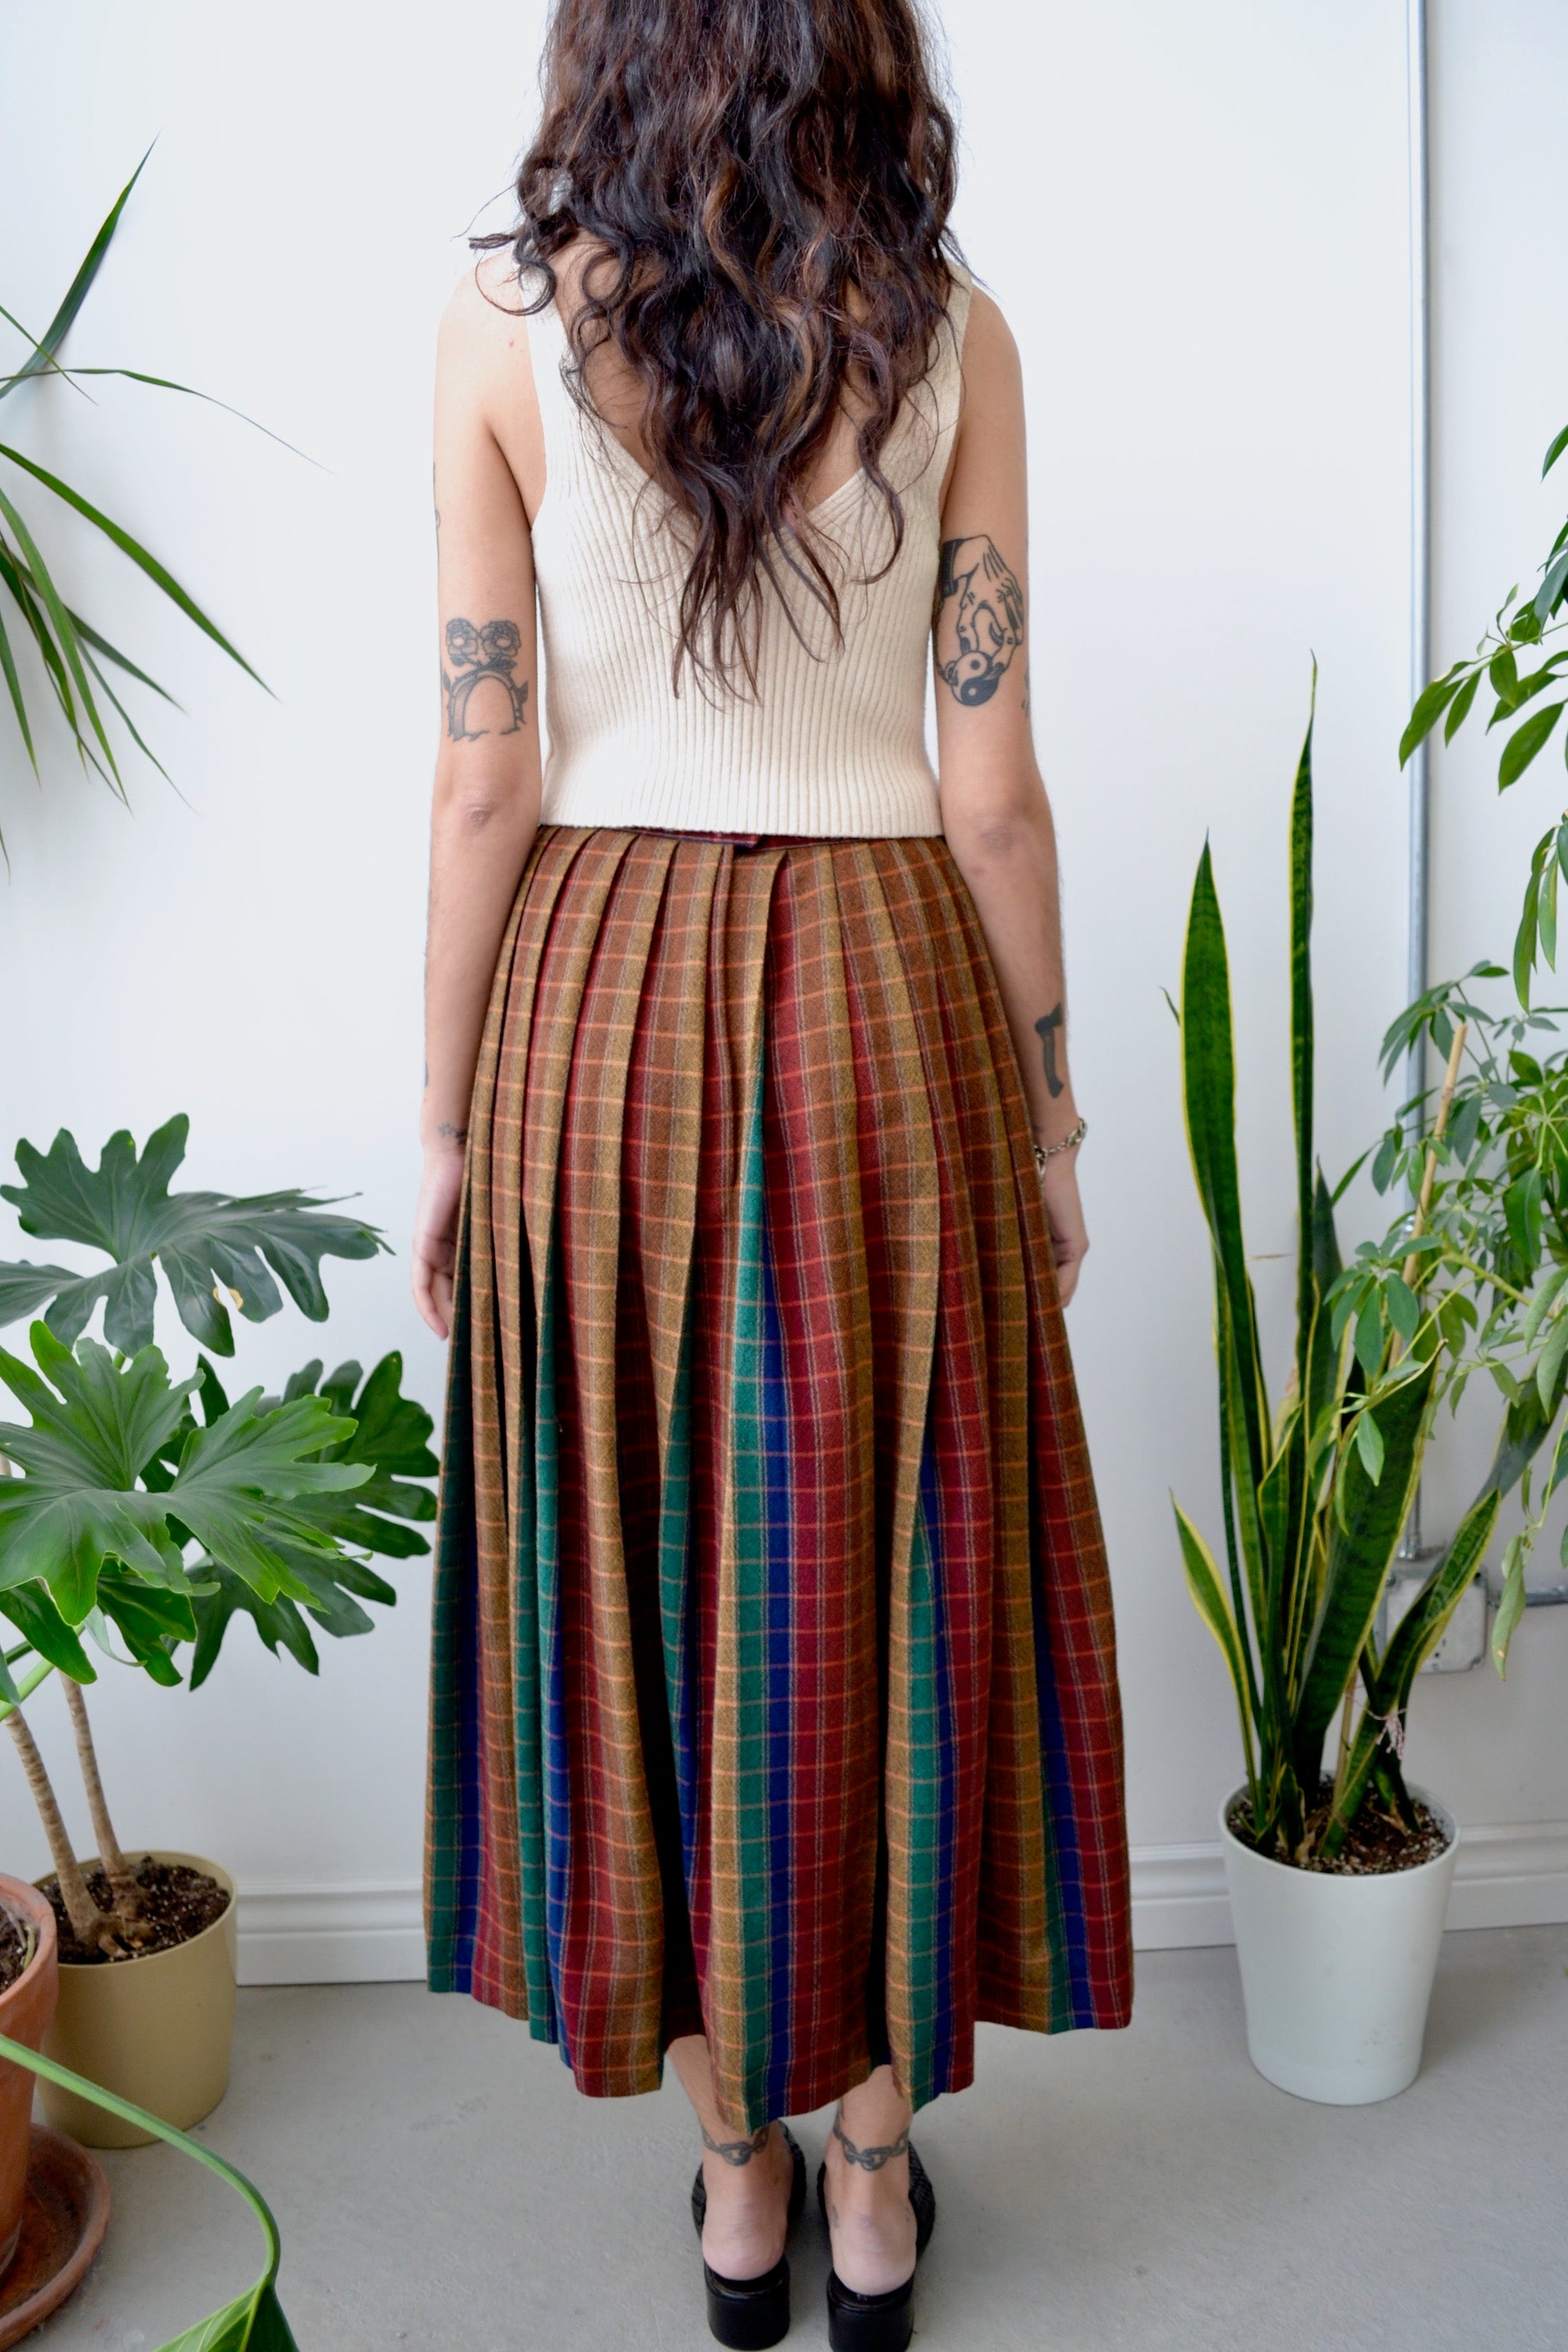 70's Rainbow Pleated Skirt